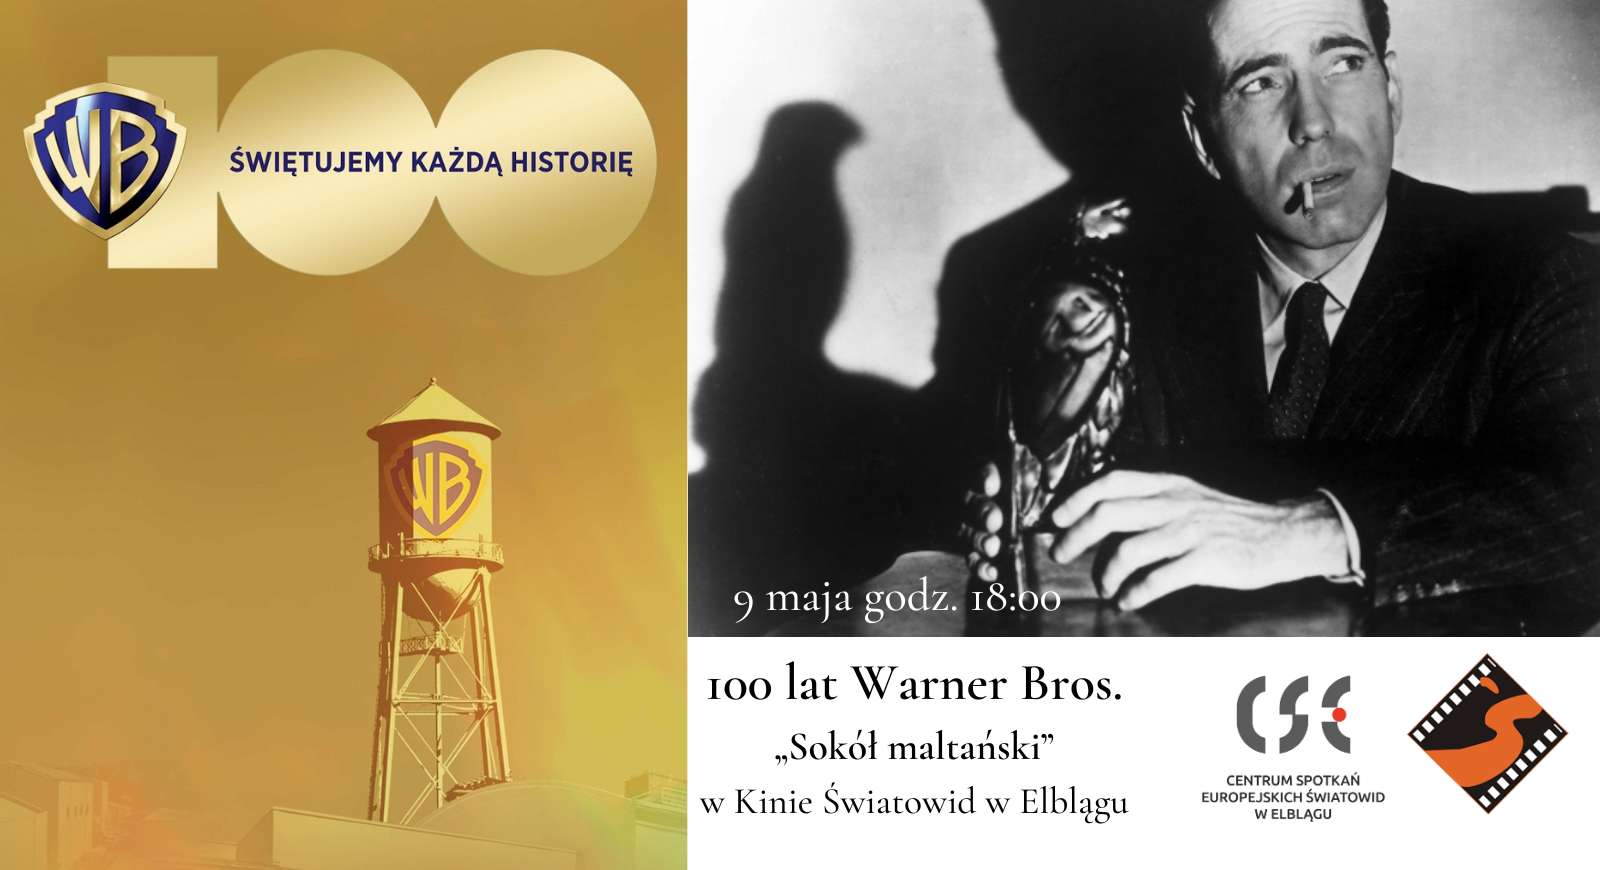 100 years of Warner Bros. "The Maltese Falcon" at Światowid Cinema